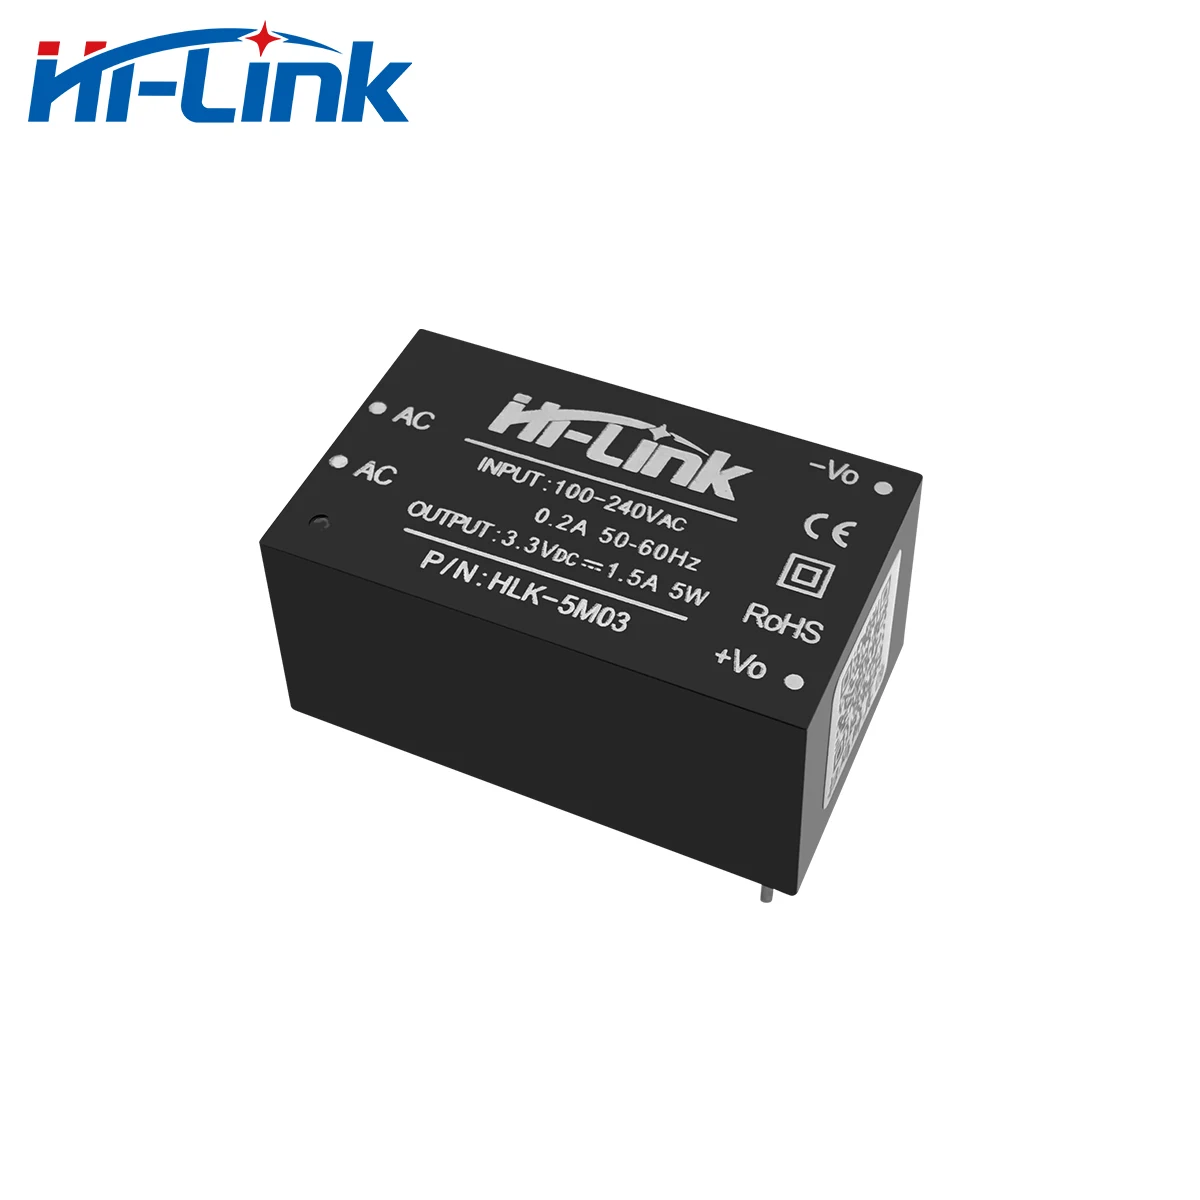 Hi-Link Original 5W 3.3V 220V 110V AC DC Power Supply Module Source HLK-5M03